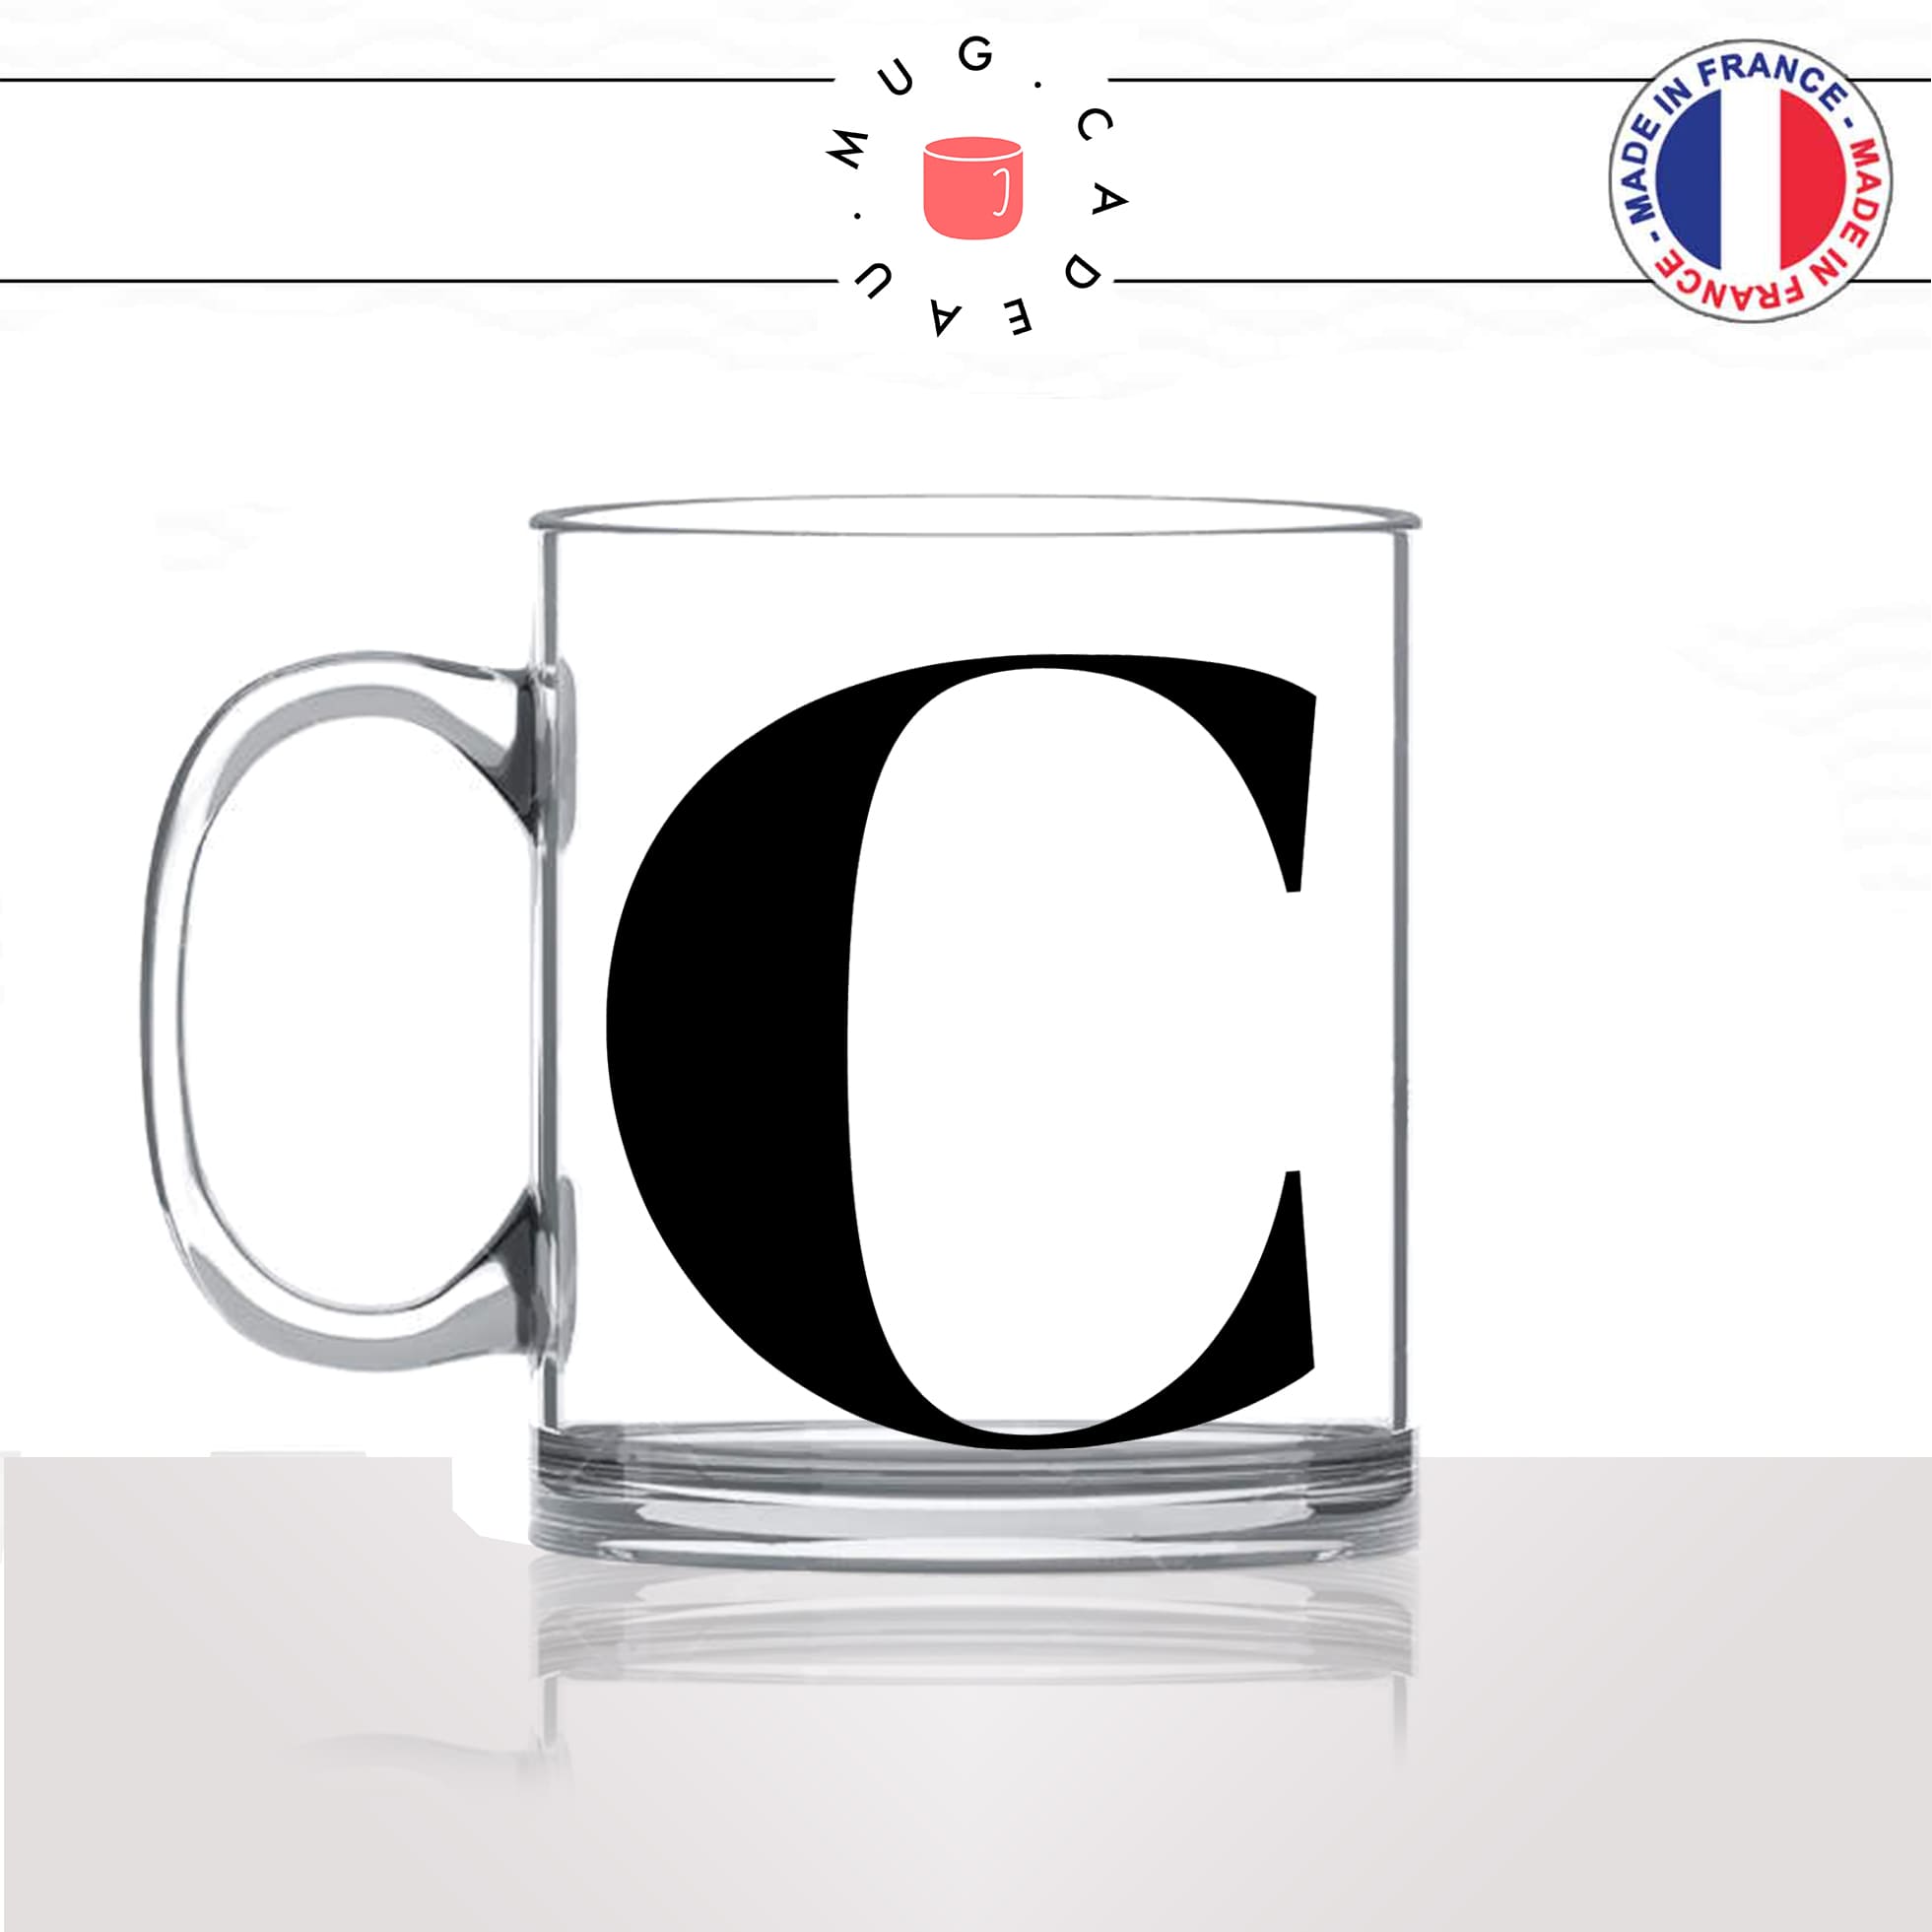 mug-tasse-en-verre-transparent-glass-initiale-C-corinne-clara-claire-cleo-chloé-camille-lettre-collegue-original-idée-cadeau-fun-cool-café-thé